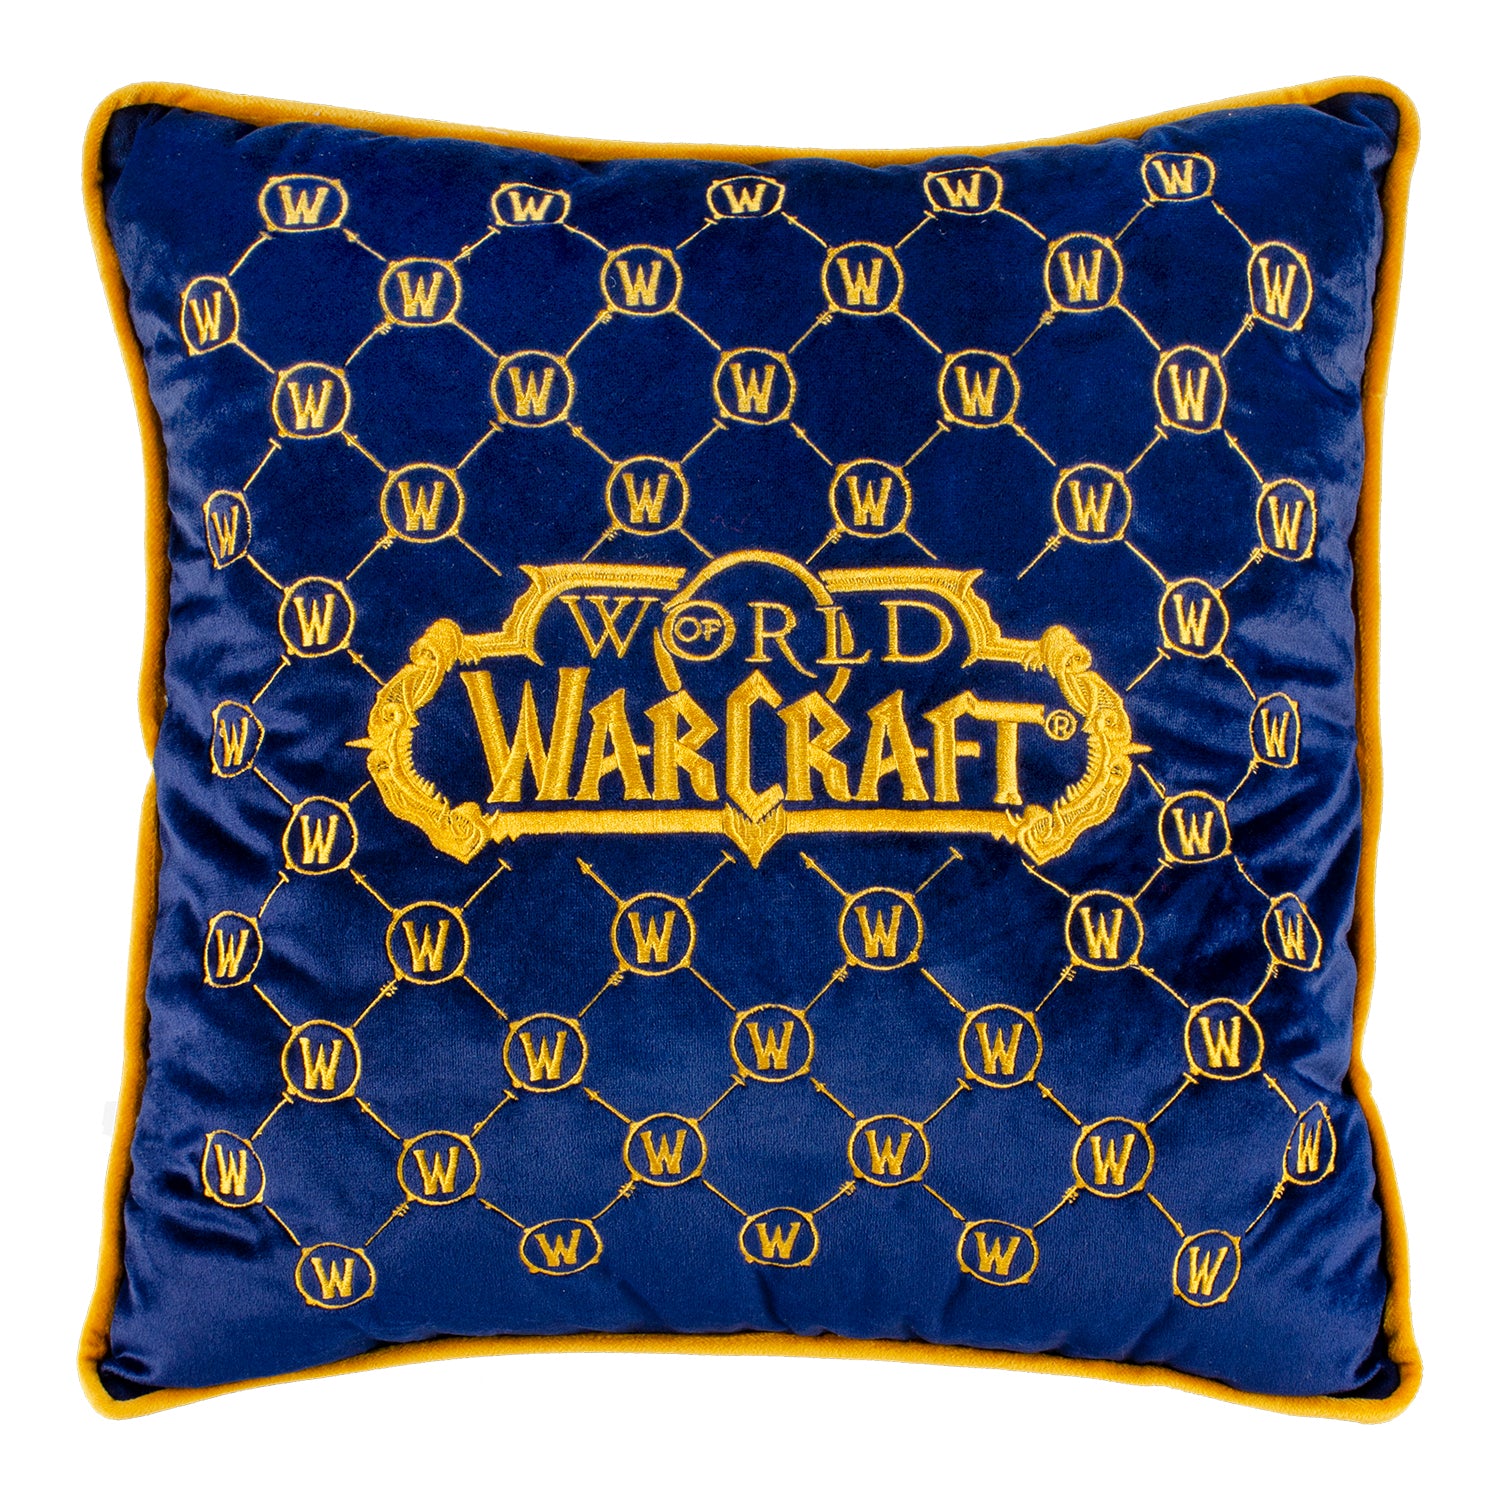 World of Warcraft Alliance Pillow - Back View